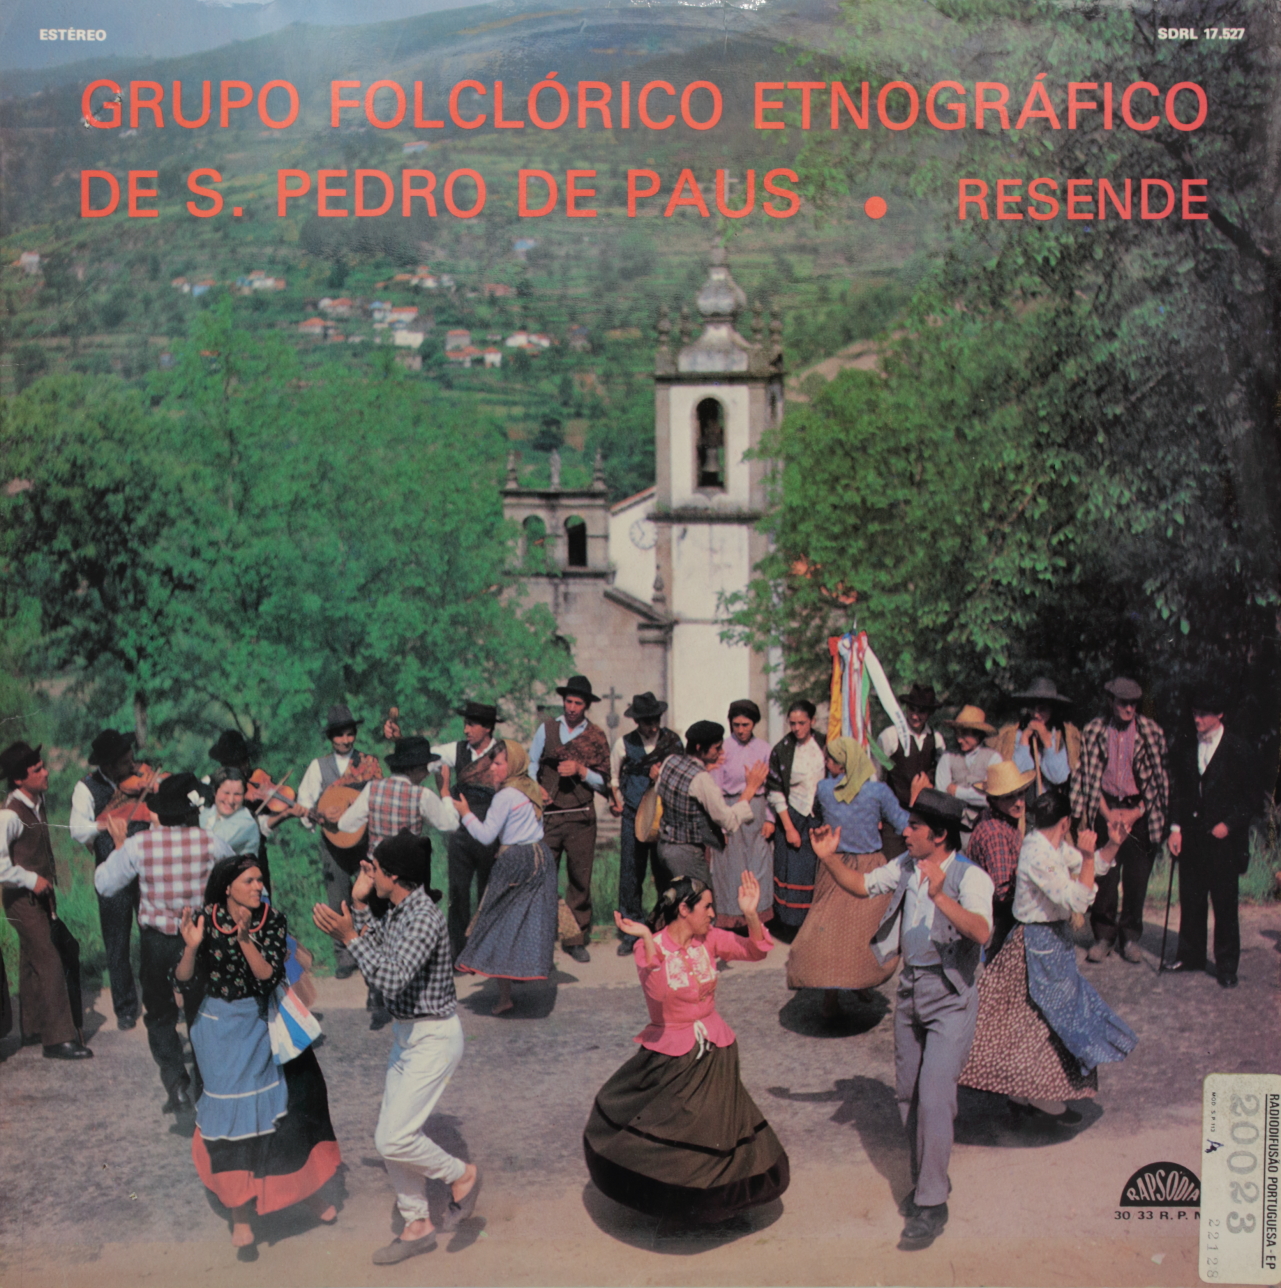 Grupo Folclórico Etnográfico de S. Pedro de Paus